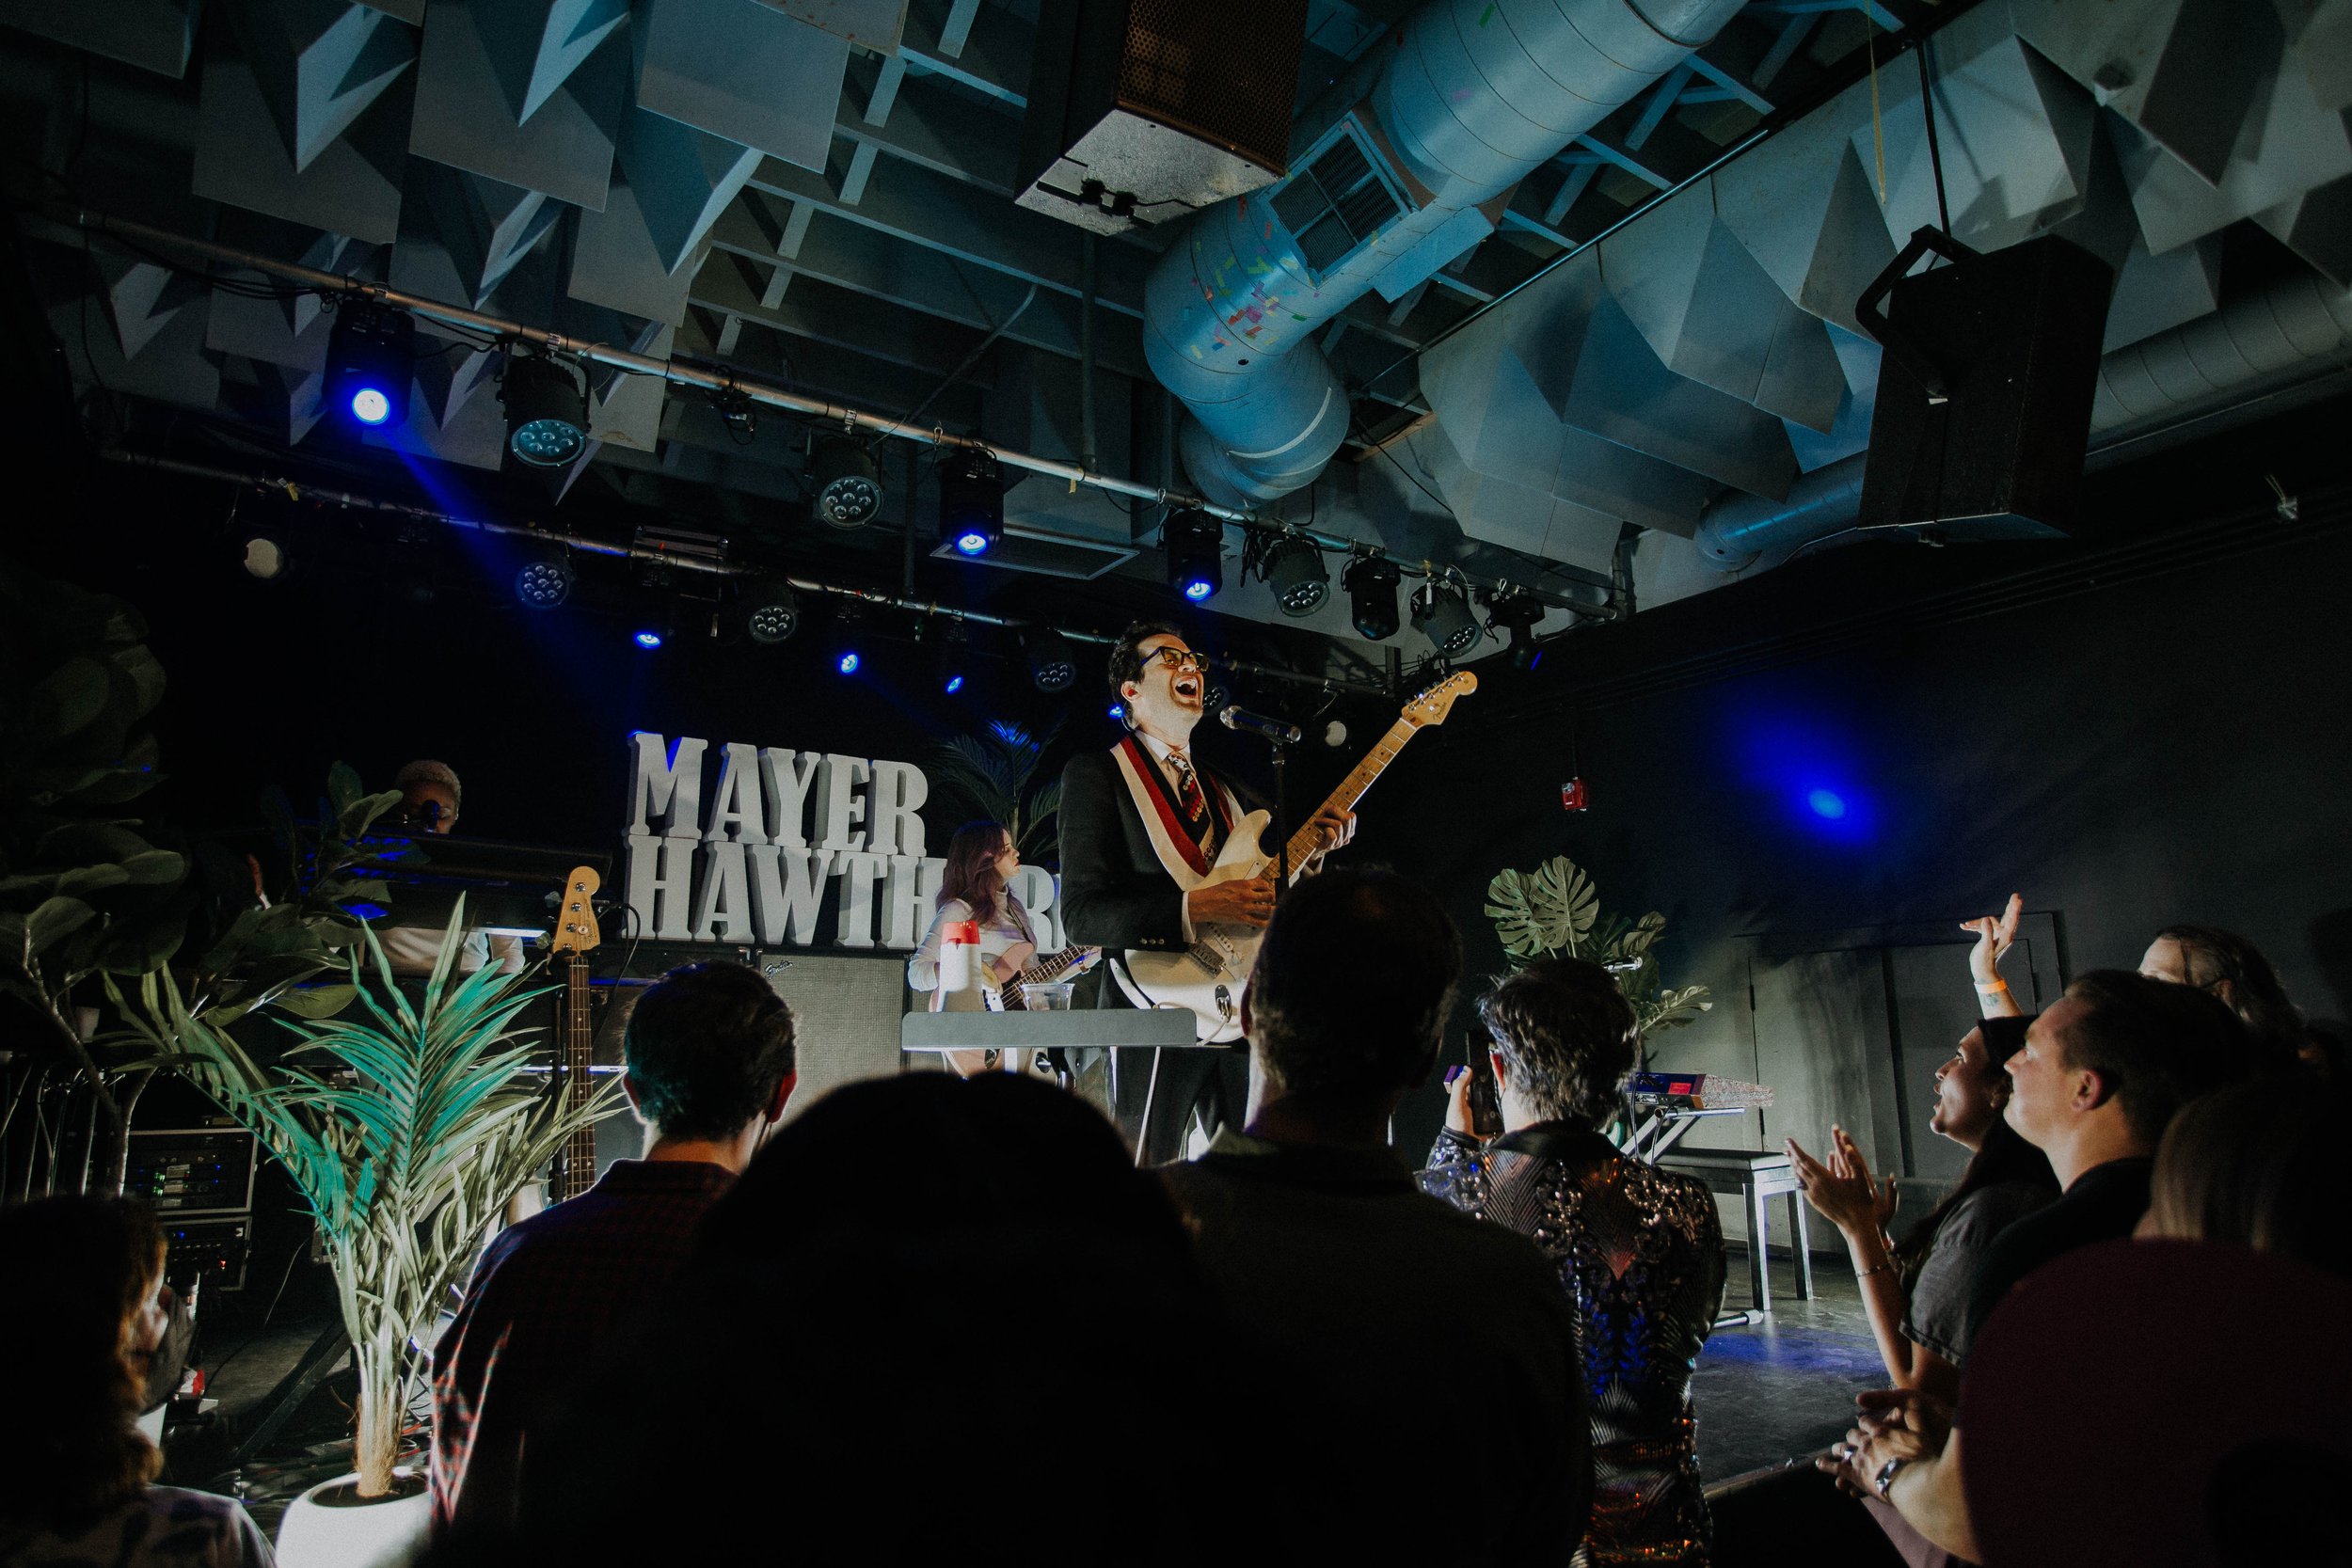    Mayer Hawthorne   // 2021-11-16 //   El Club     - Detroit, MI // Photos by   Paul John Farinas   